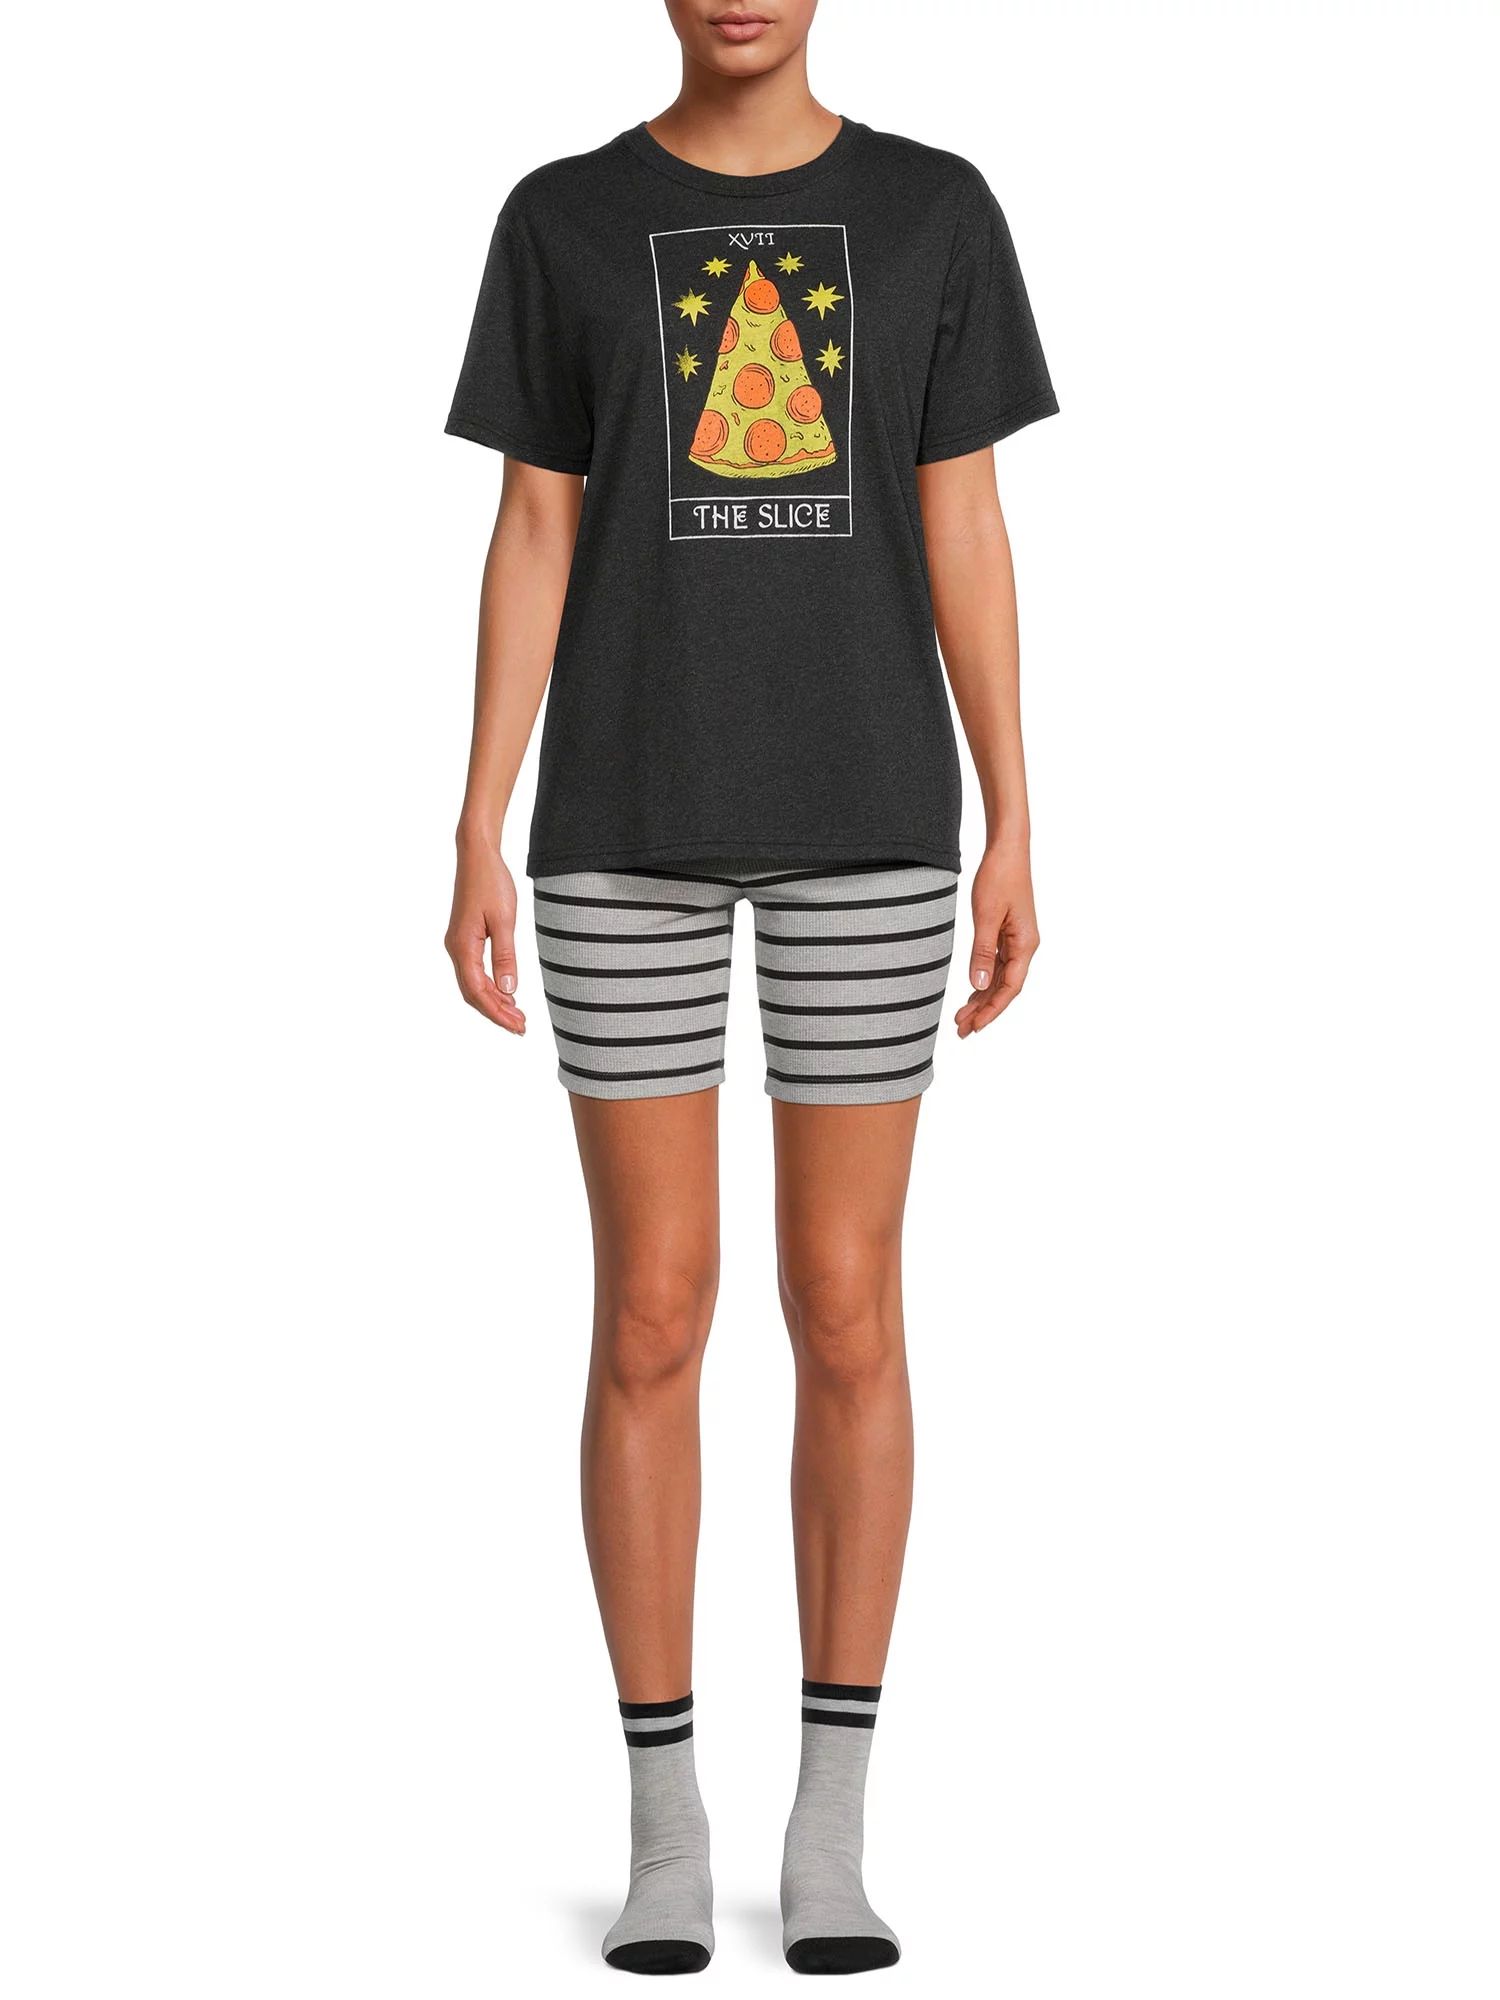 Juniors and Juniors Plus Short Sleeve Tee, Lounge Shorts and Socks, 3-Piece Set | Walmart (US)